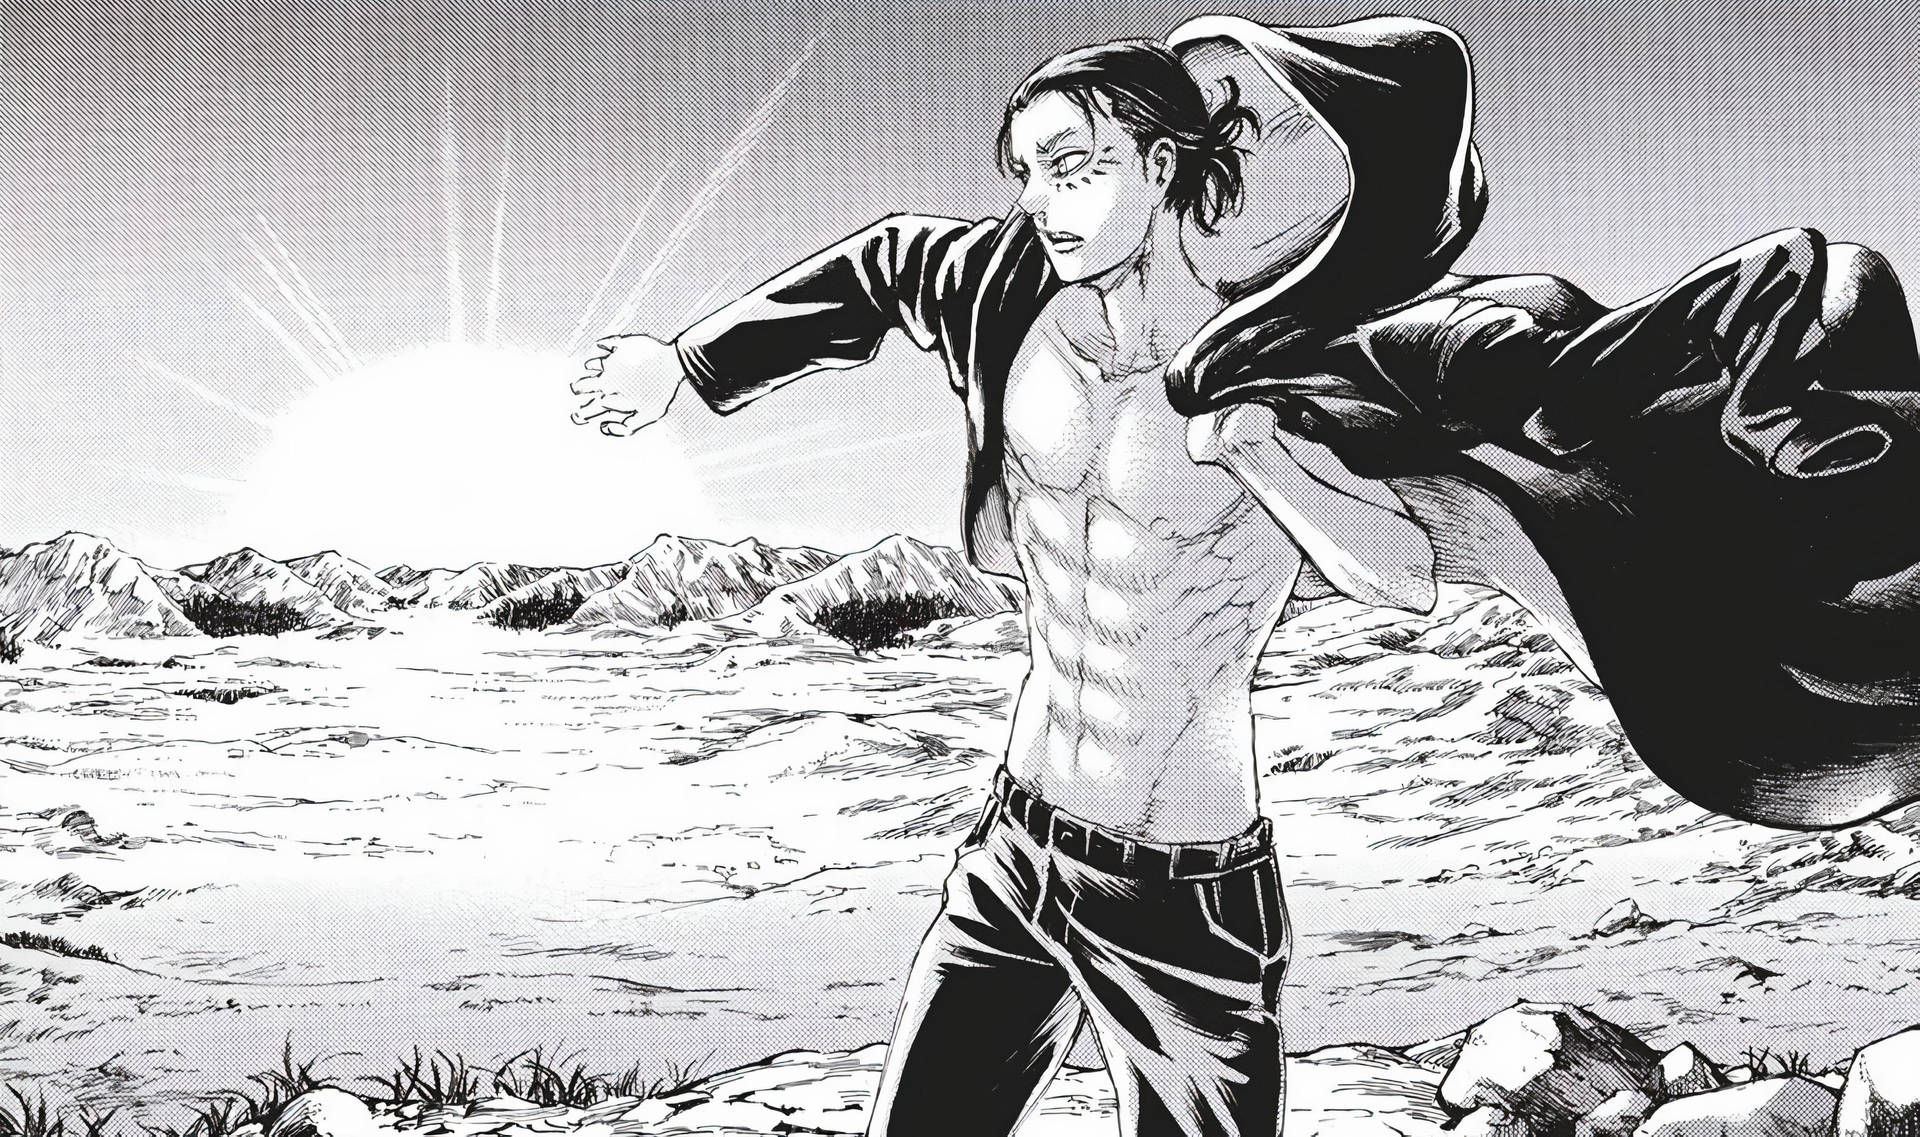 Eren Season 4 Panel From Manga Background